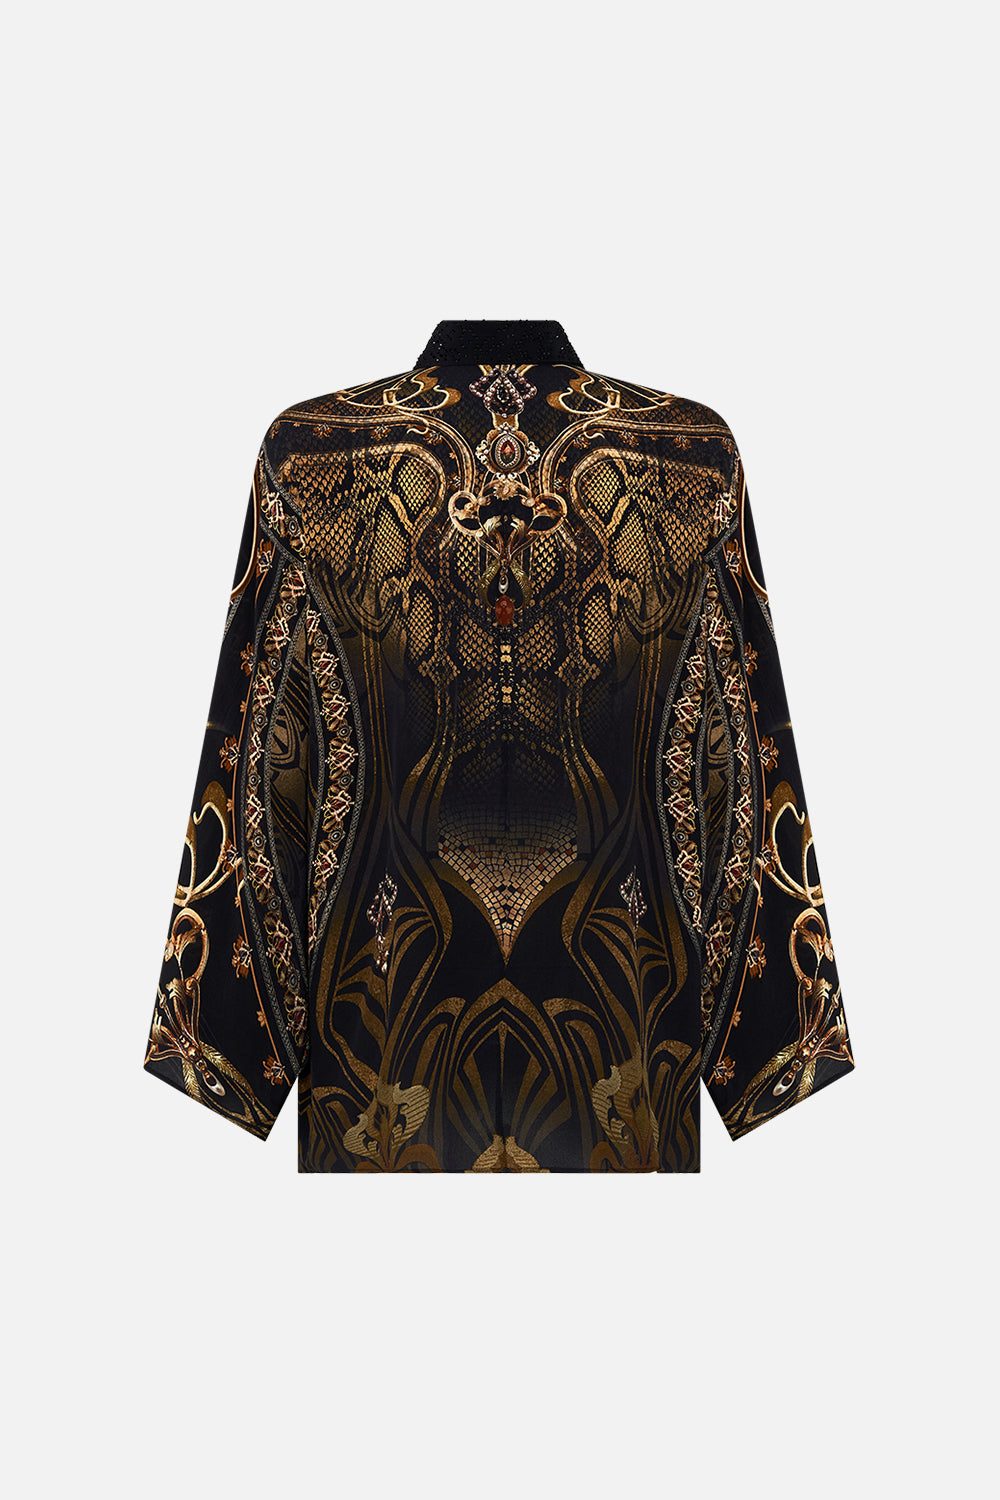 CAMILLA silk blouse in Nouveau Noir print